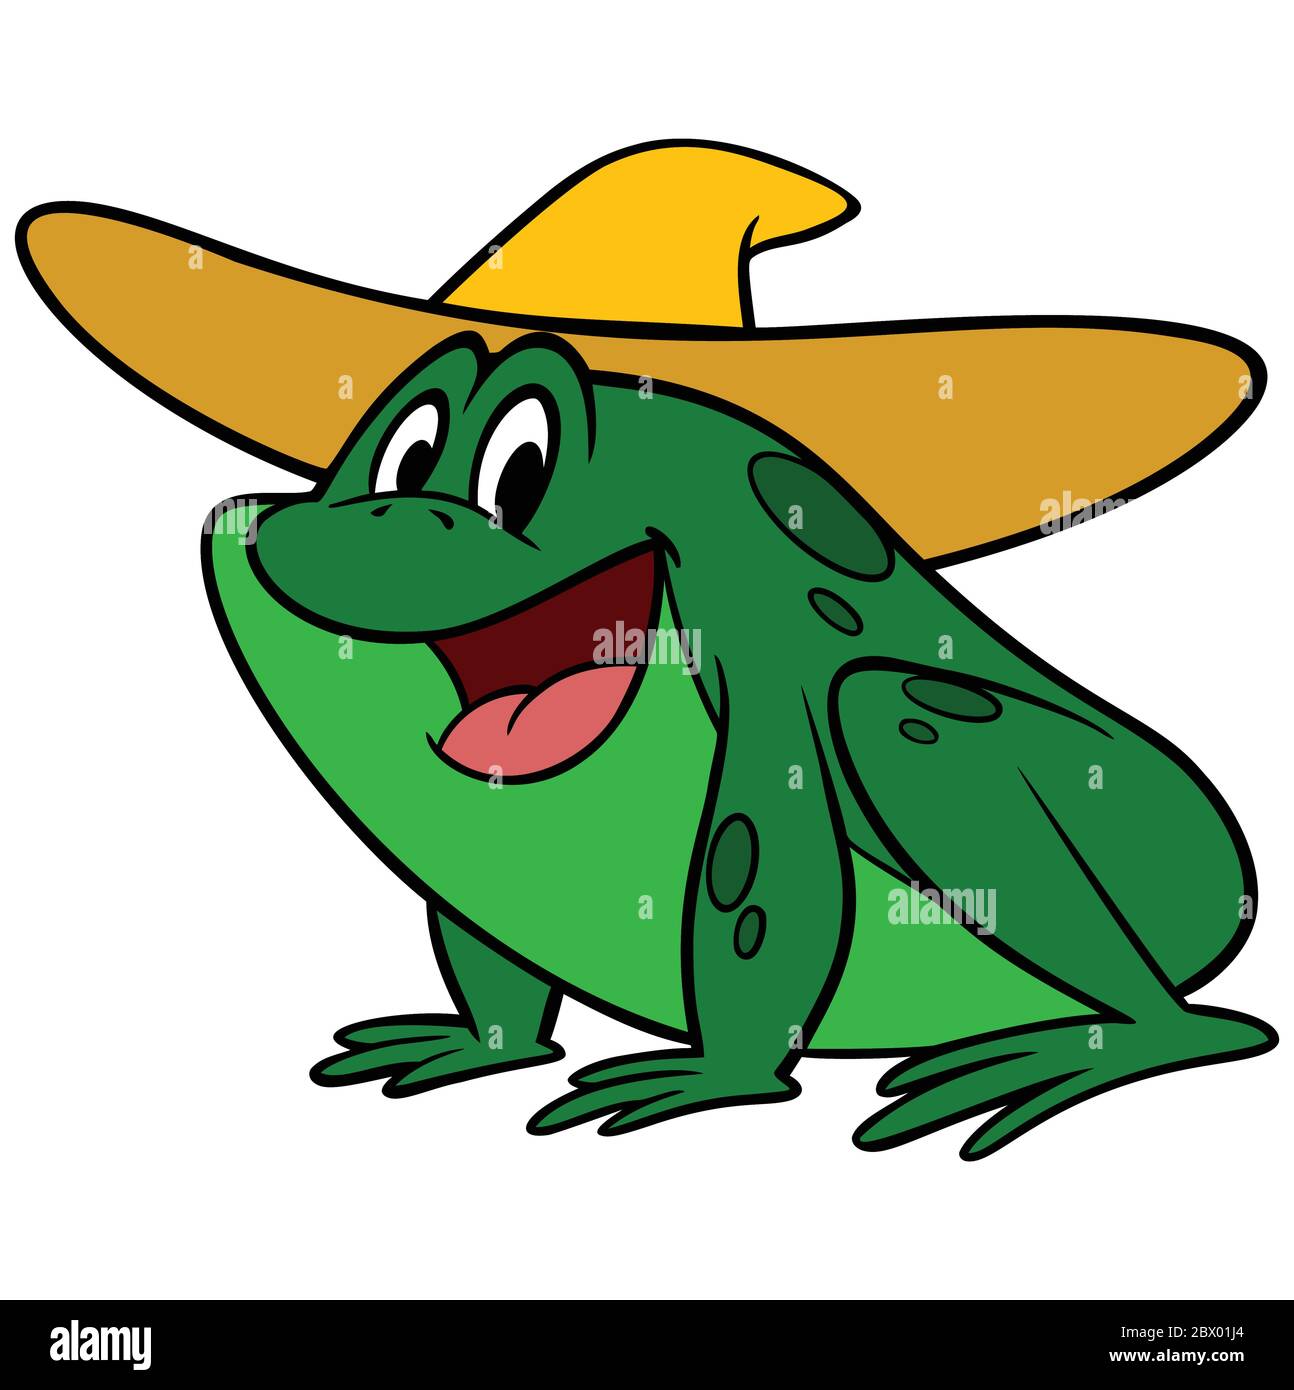 Hillbilly Frog- EINE Cartoon Illustration eines Hillbilly Frogs. Stock Vektor